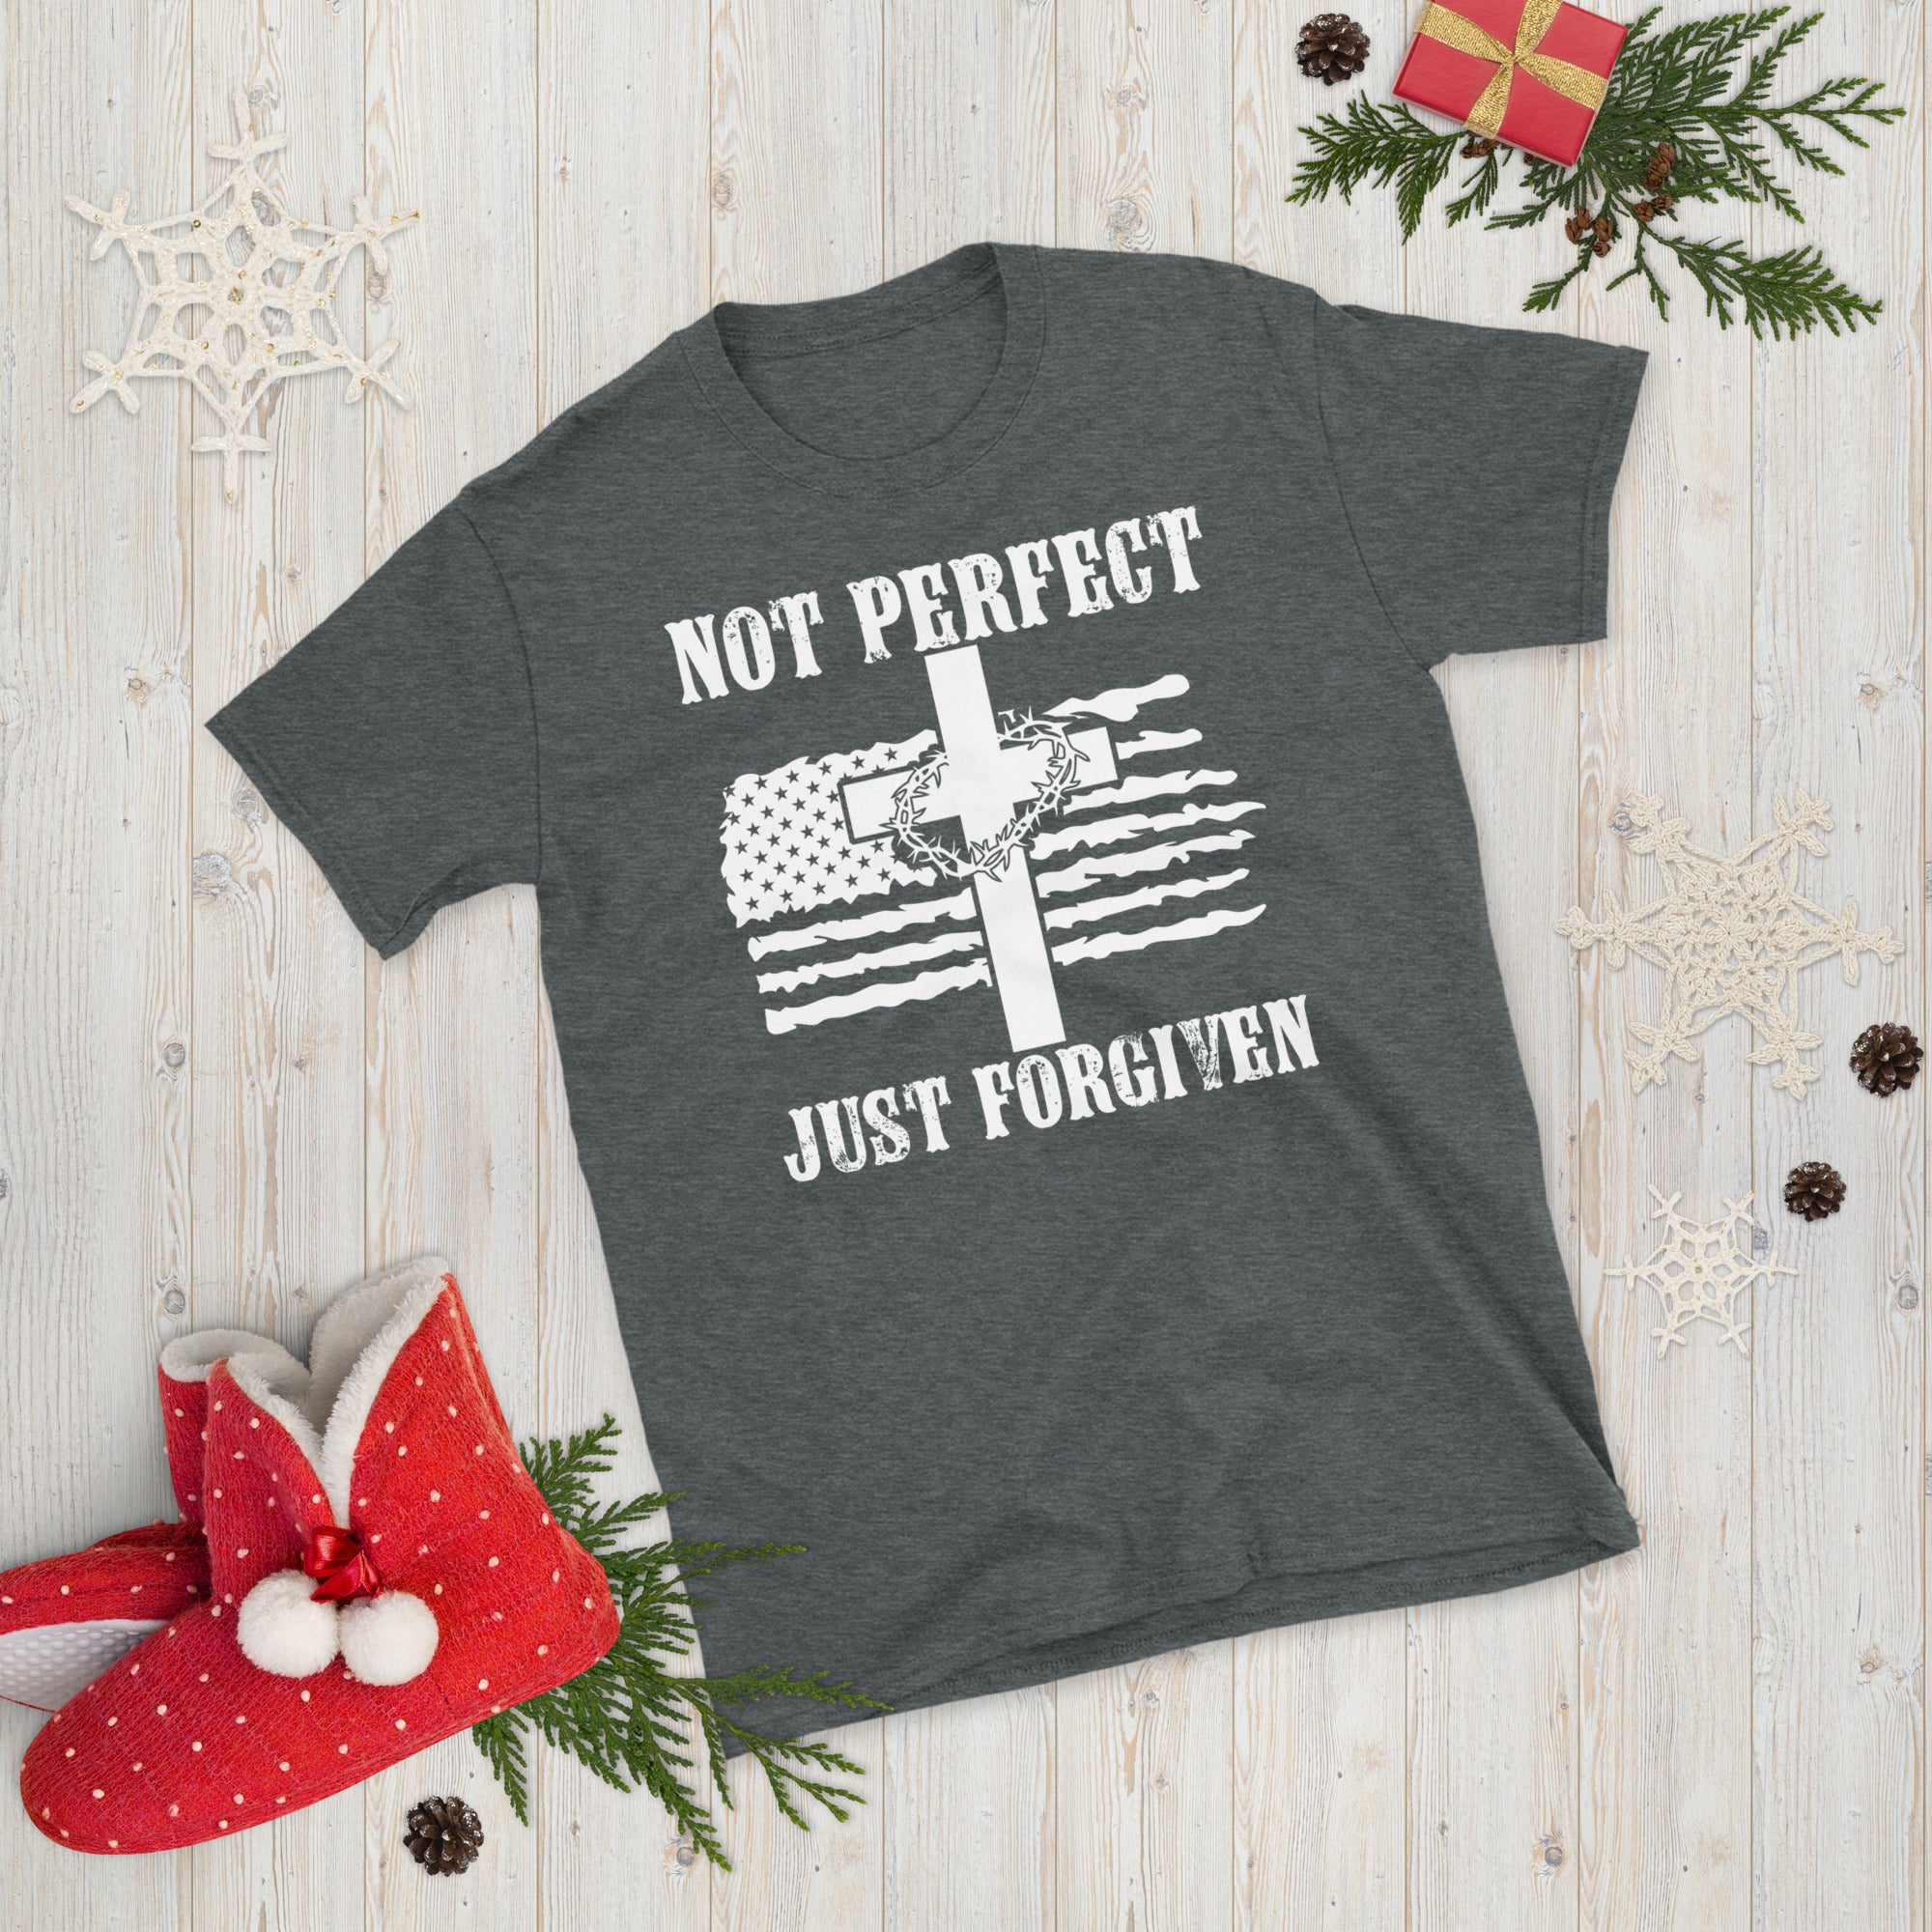 Not Perfect Just Forgiven Shirt, Christian Shirt, Religious Gifts For Men, Bible Verse Tshirt, Religious Gifts, Holy Bible T Shirt - Madeinsea©